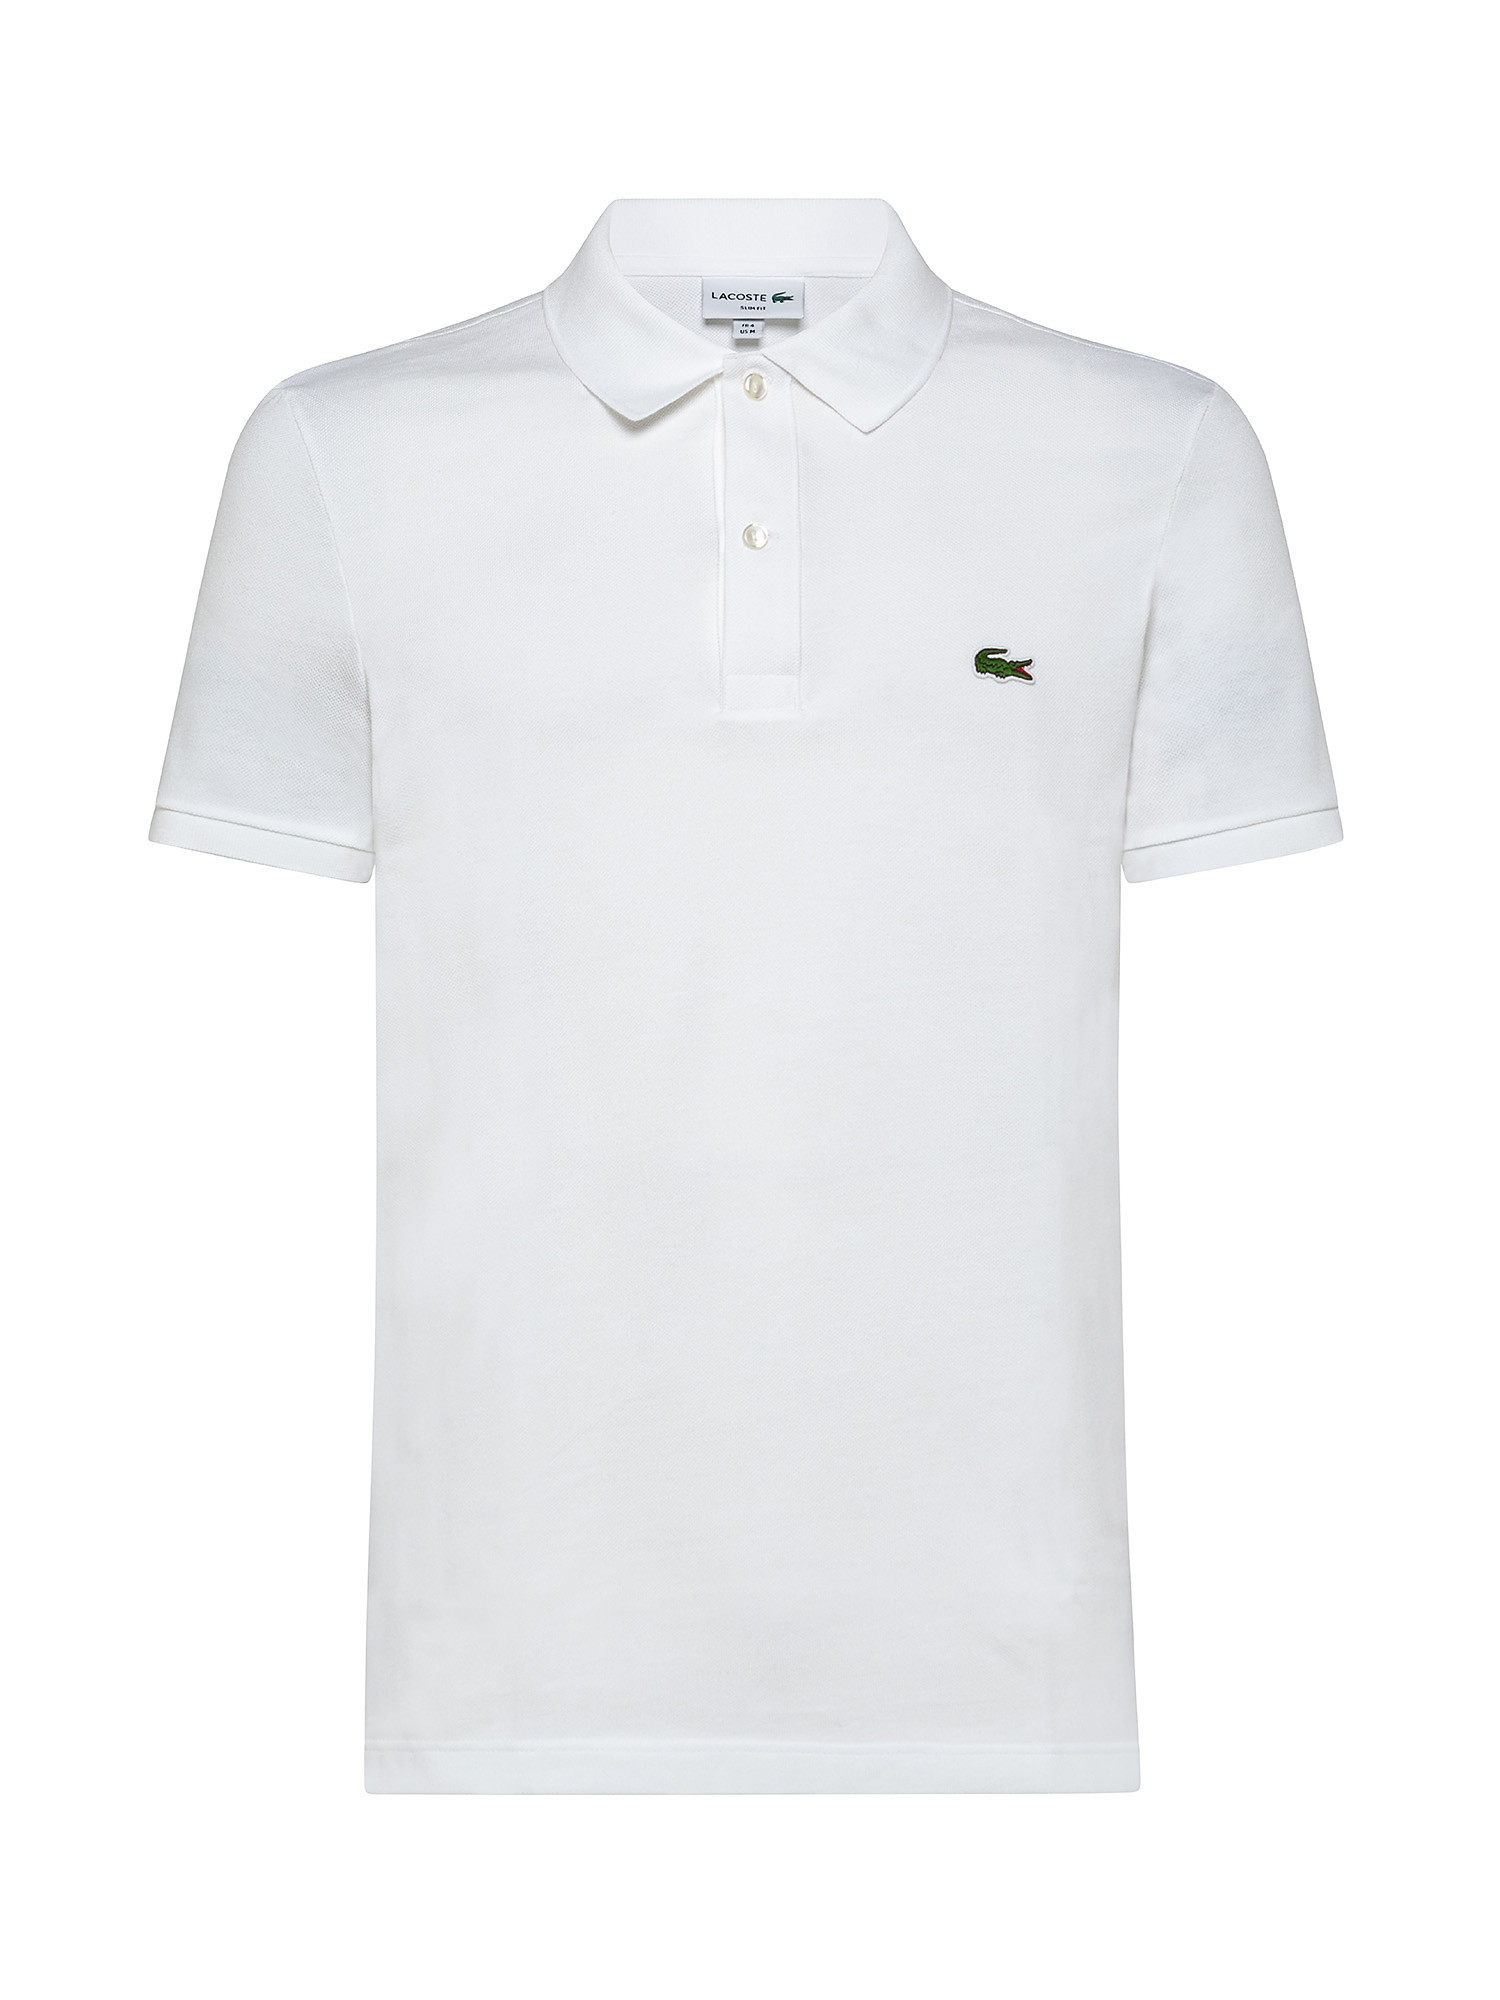 Polo shirt, White, large image number 0